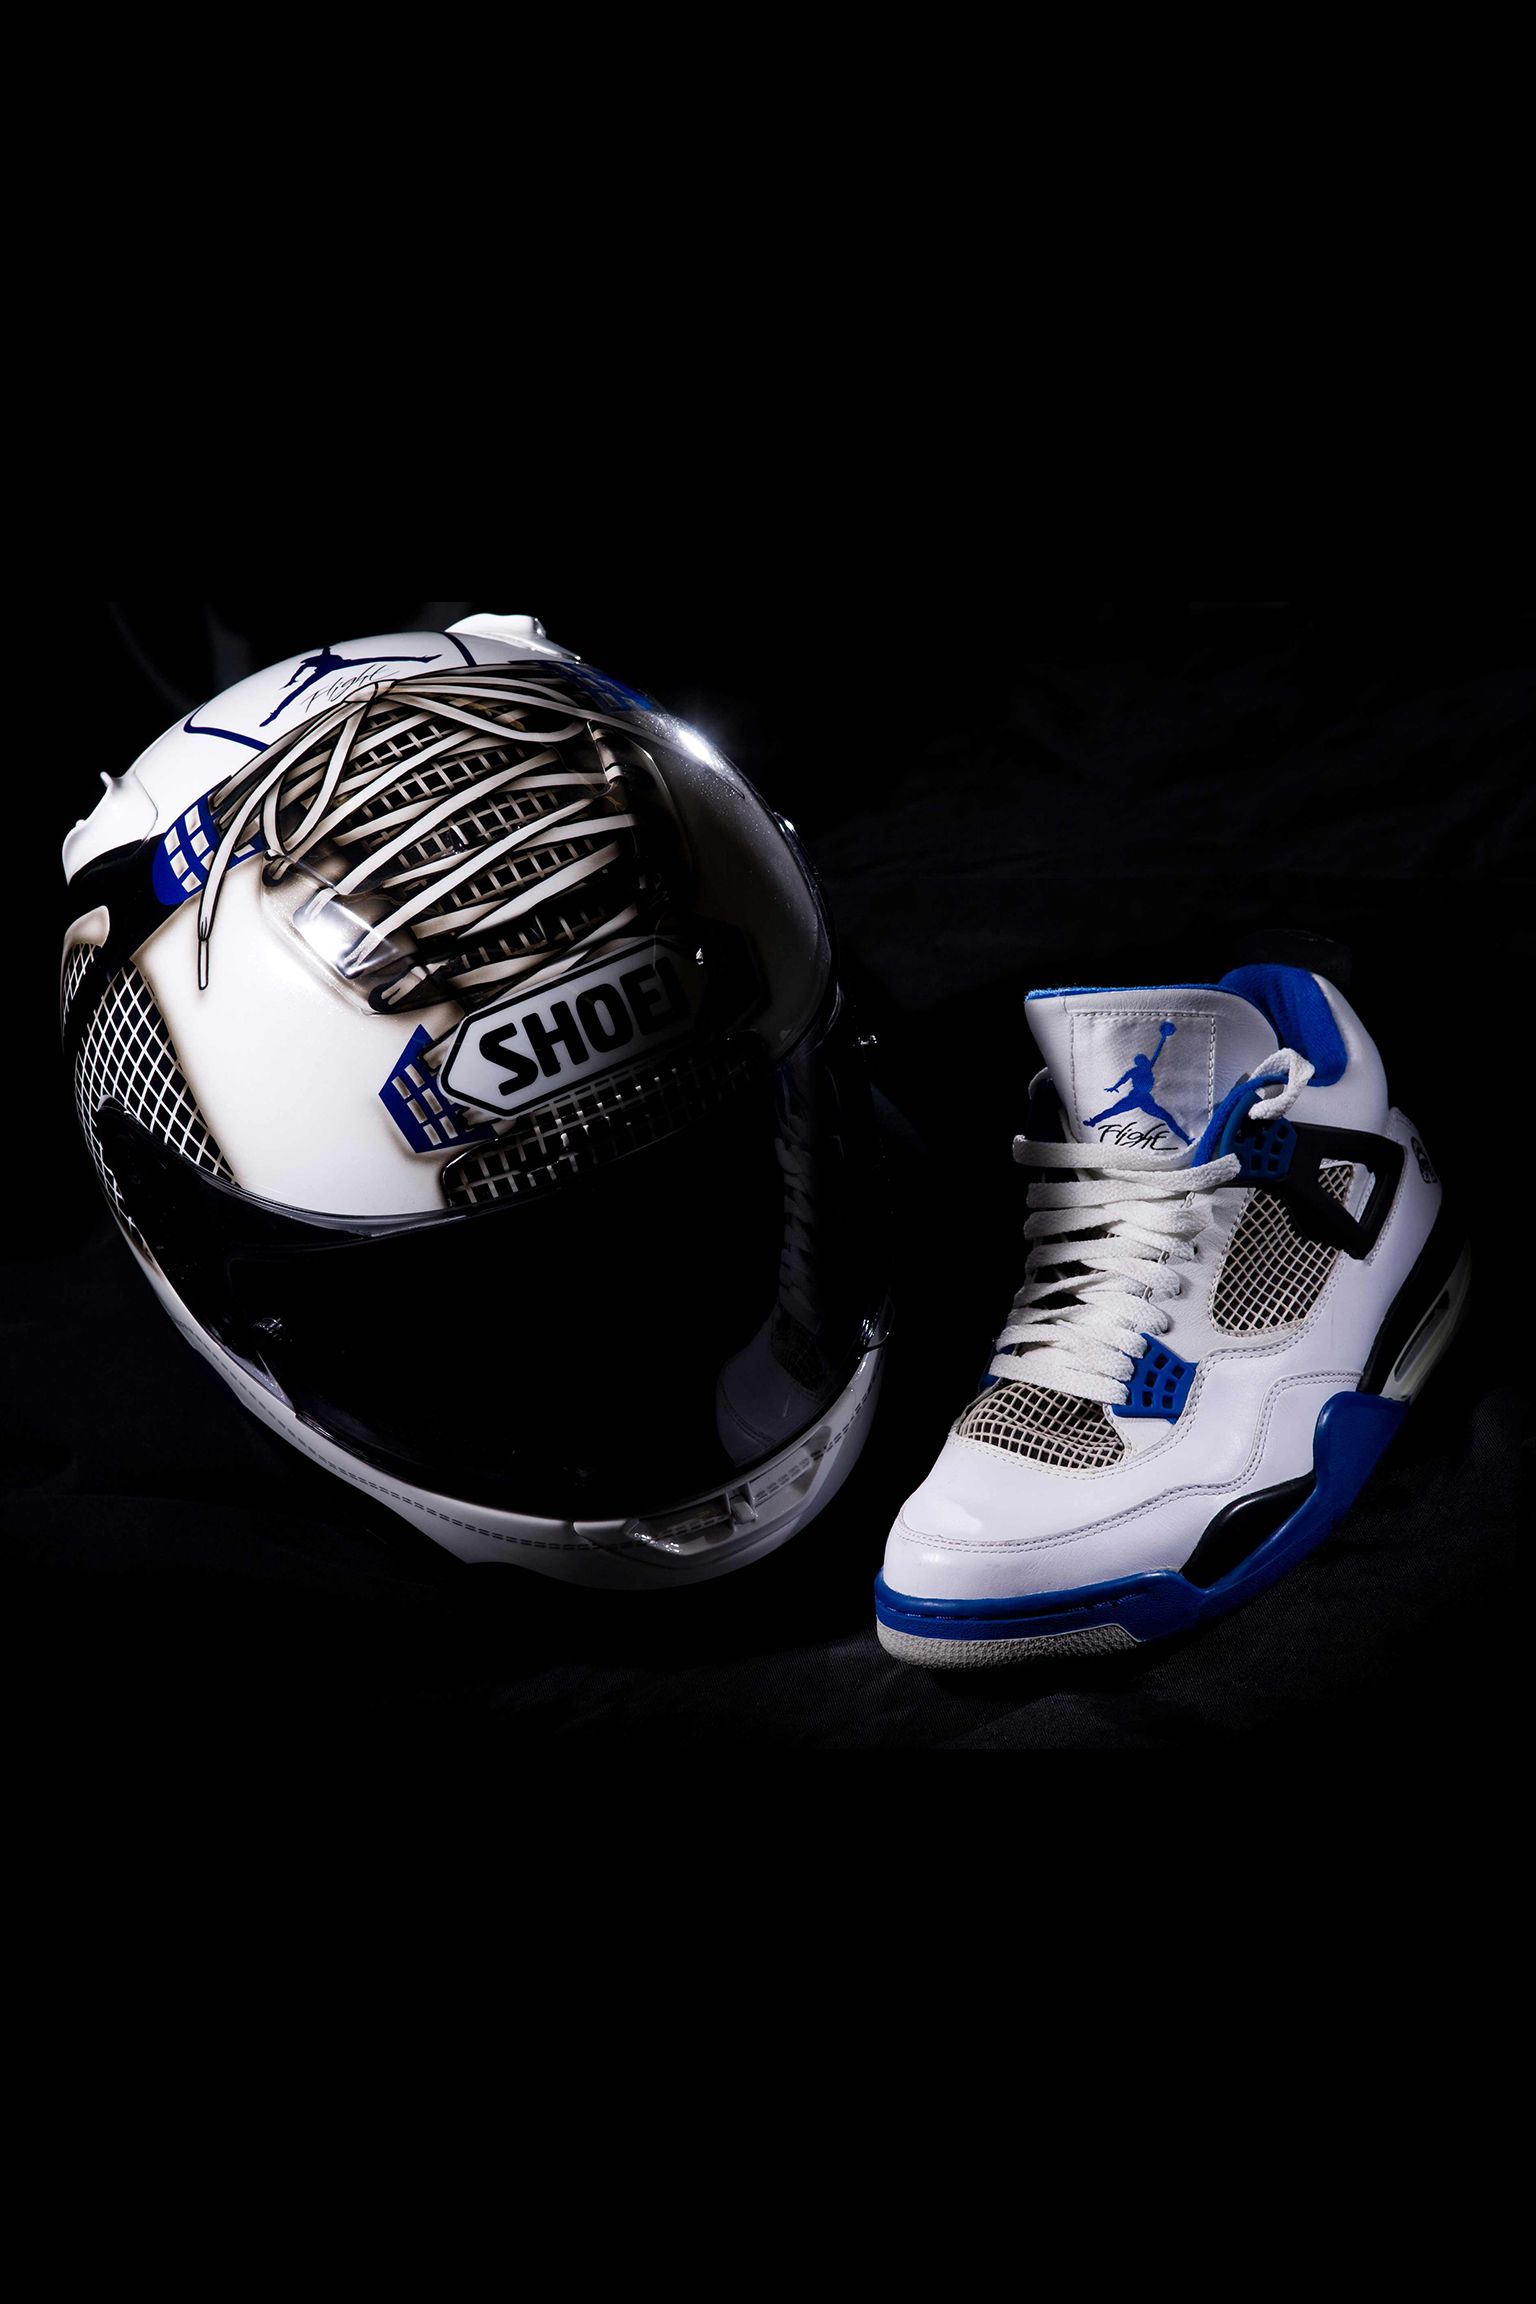 Michael Jordan Autographed Nike Air Jordan 4 Retro What The Shoes